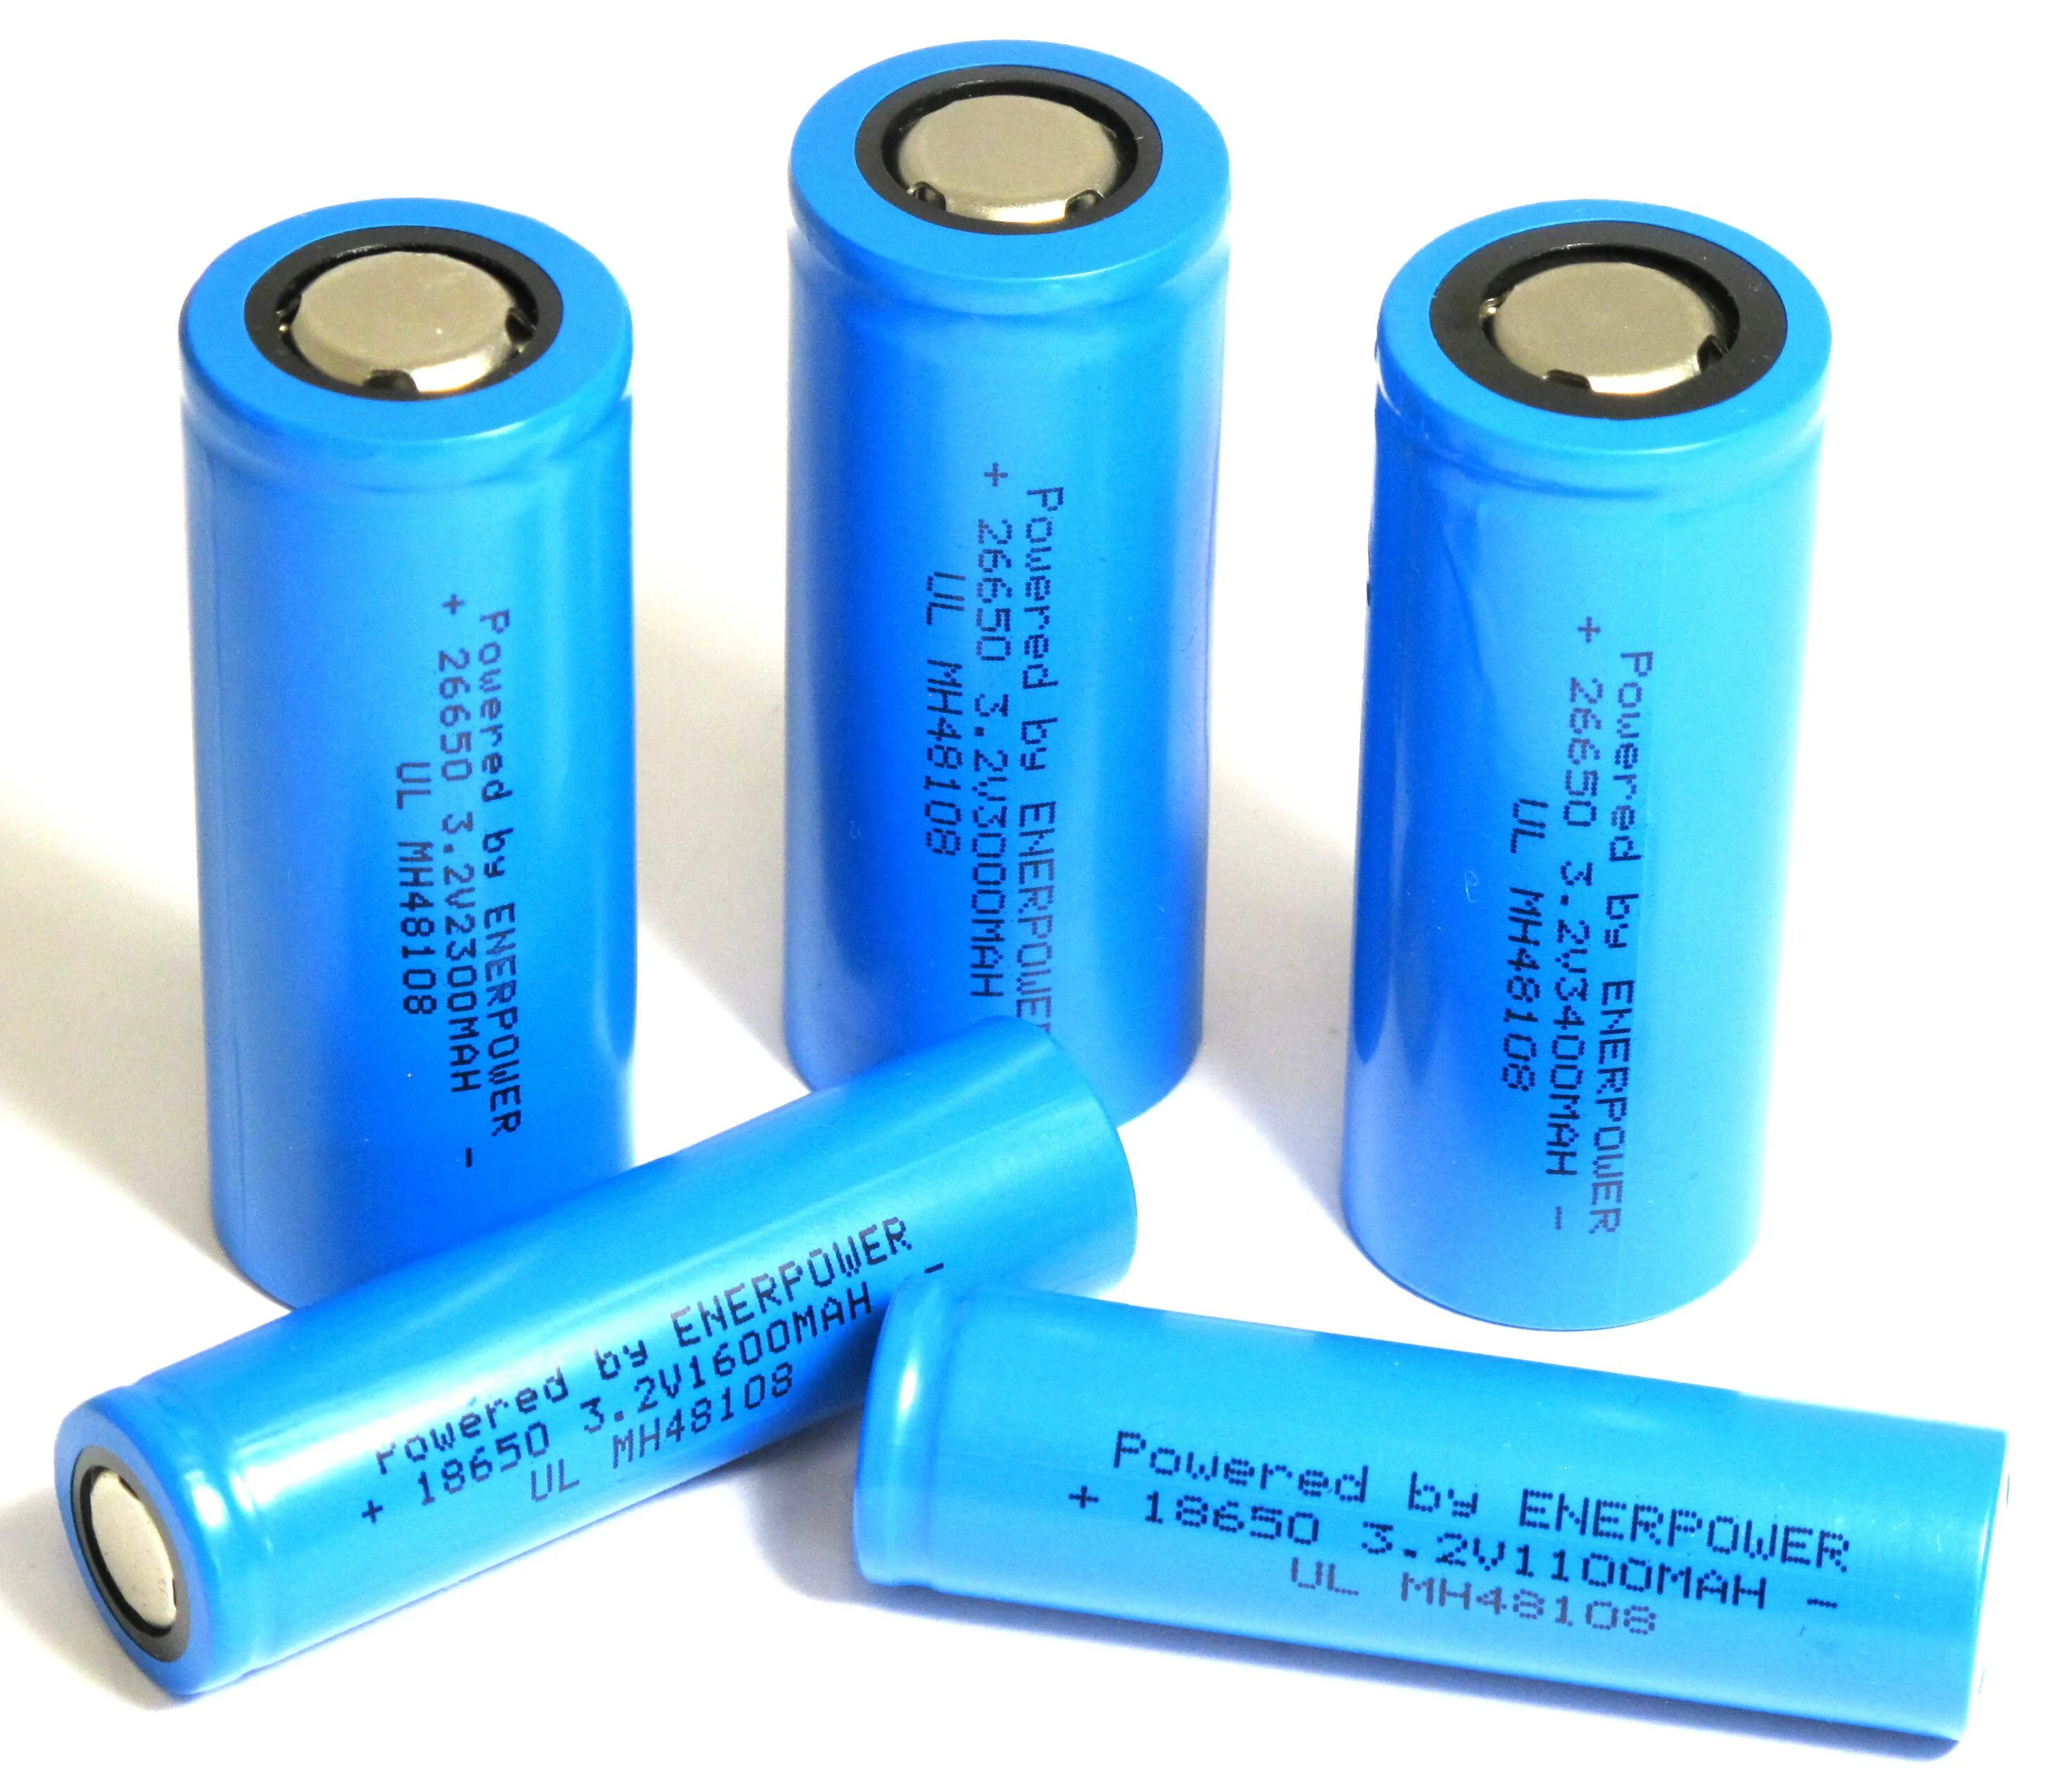 Lifepo4 battery. Lifepo4 аккумуляторы 18650. 18650 Lifepo4. Lifepo4 33138. Аккумулятор lifepo4 AAA.